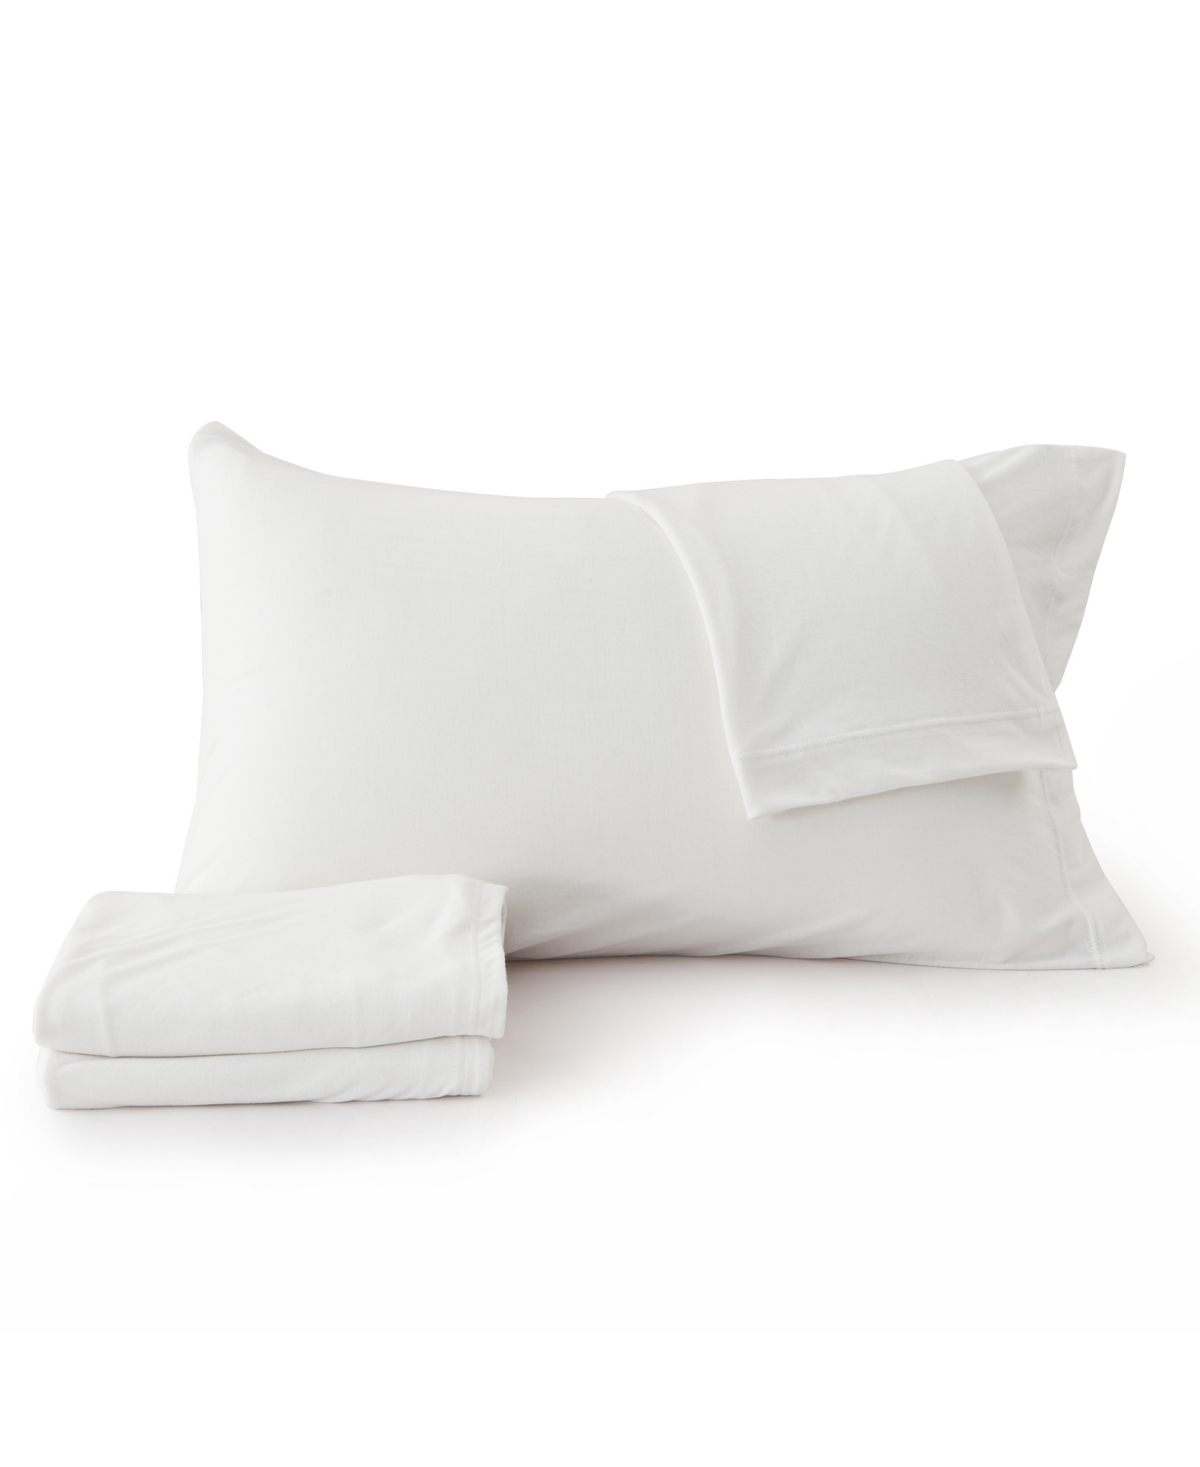 Premium Comforts Heathered Melange T-shirt Jersey Knit Cotton Blend 4 Piece Sheet Set, Queen In Winter White